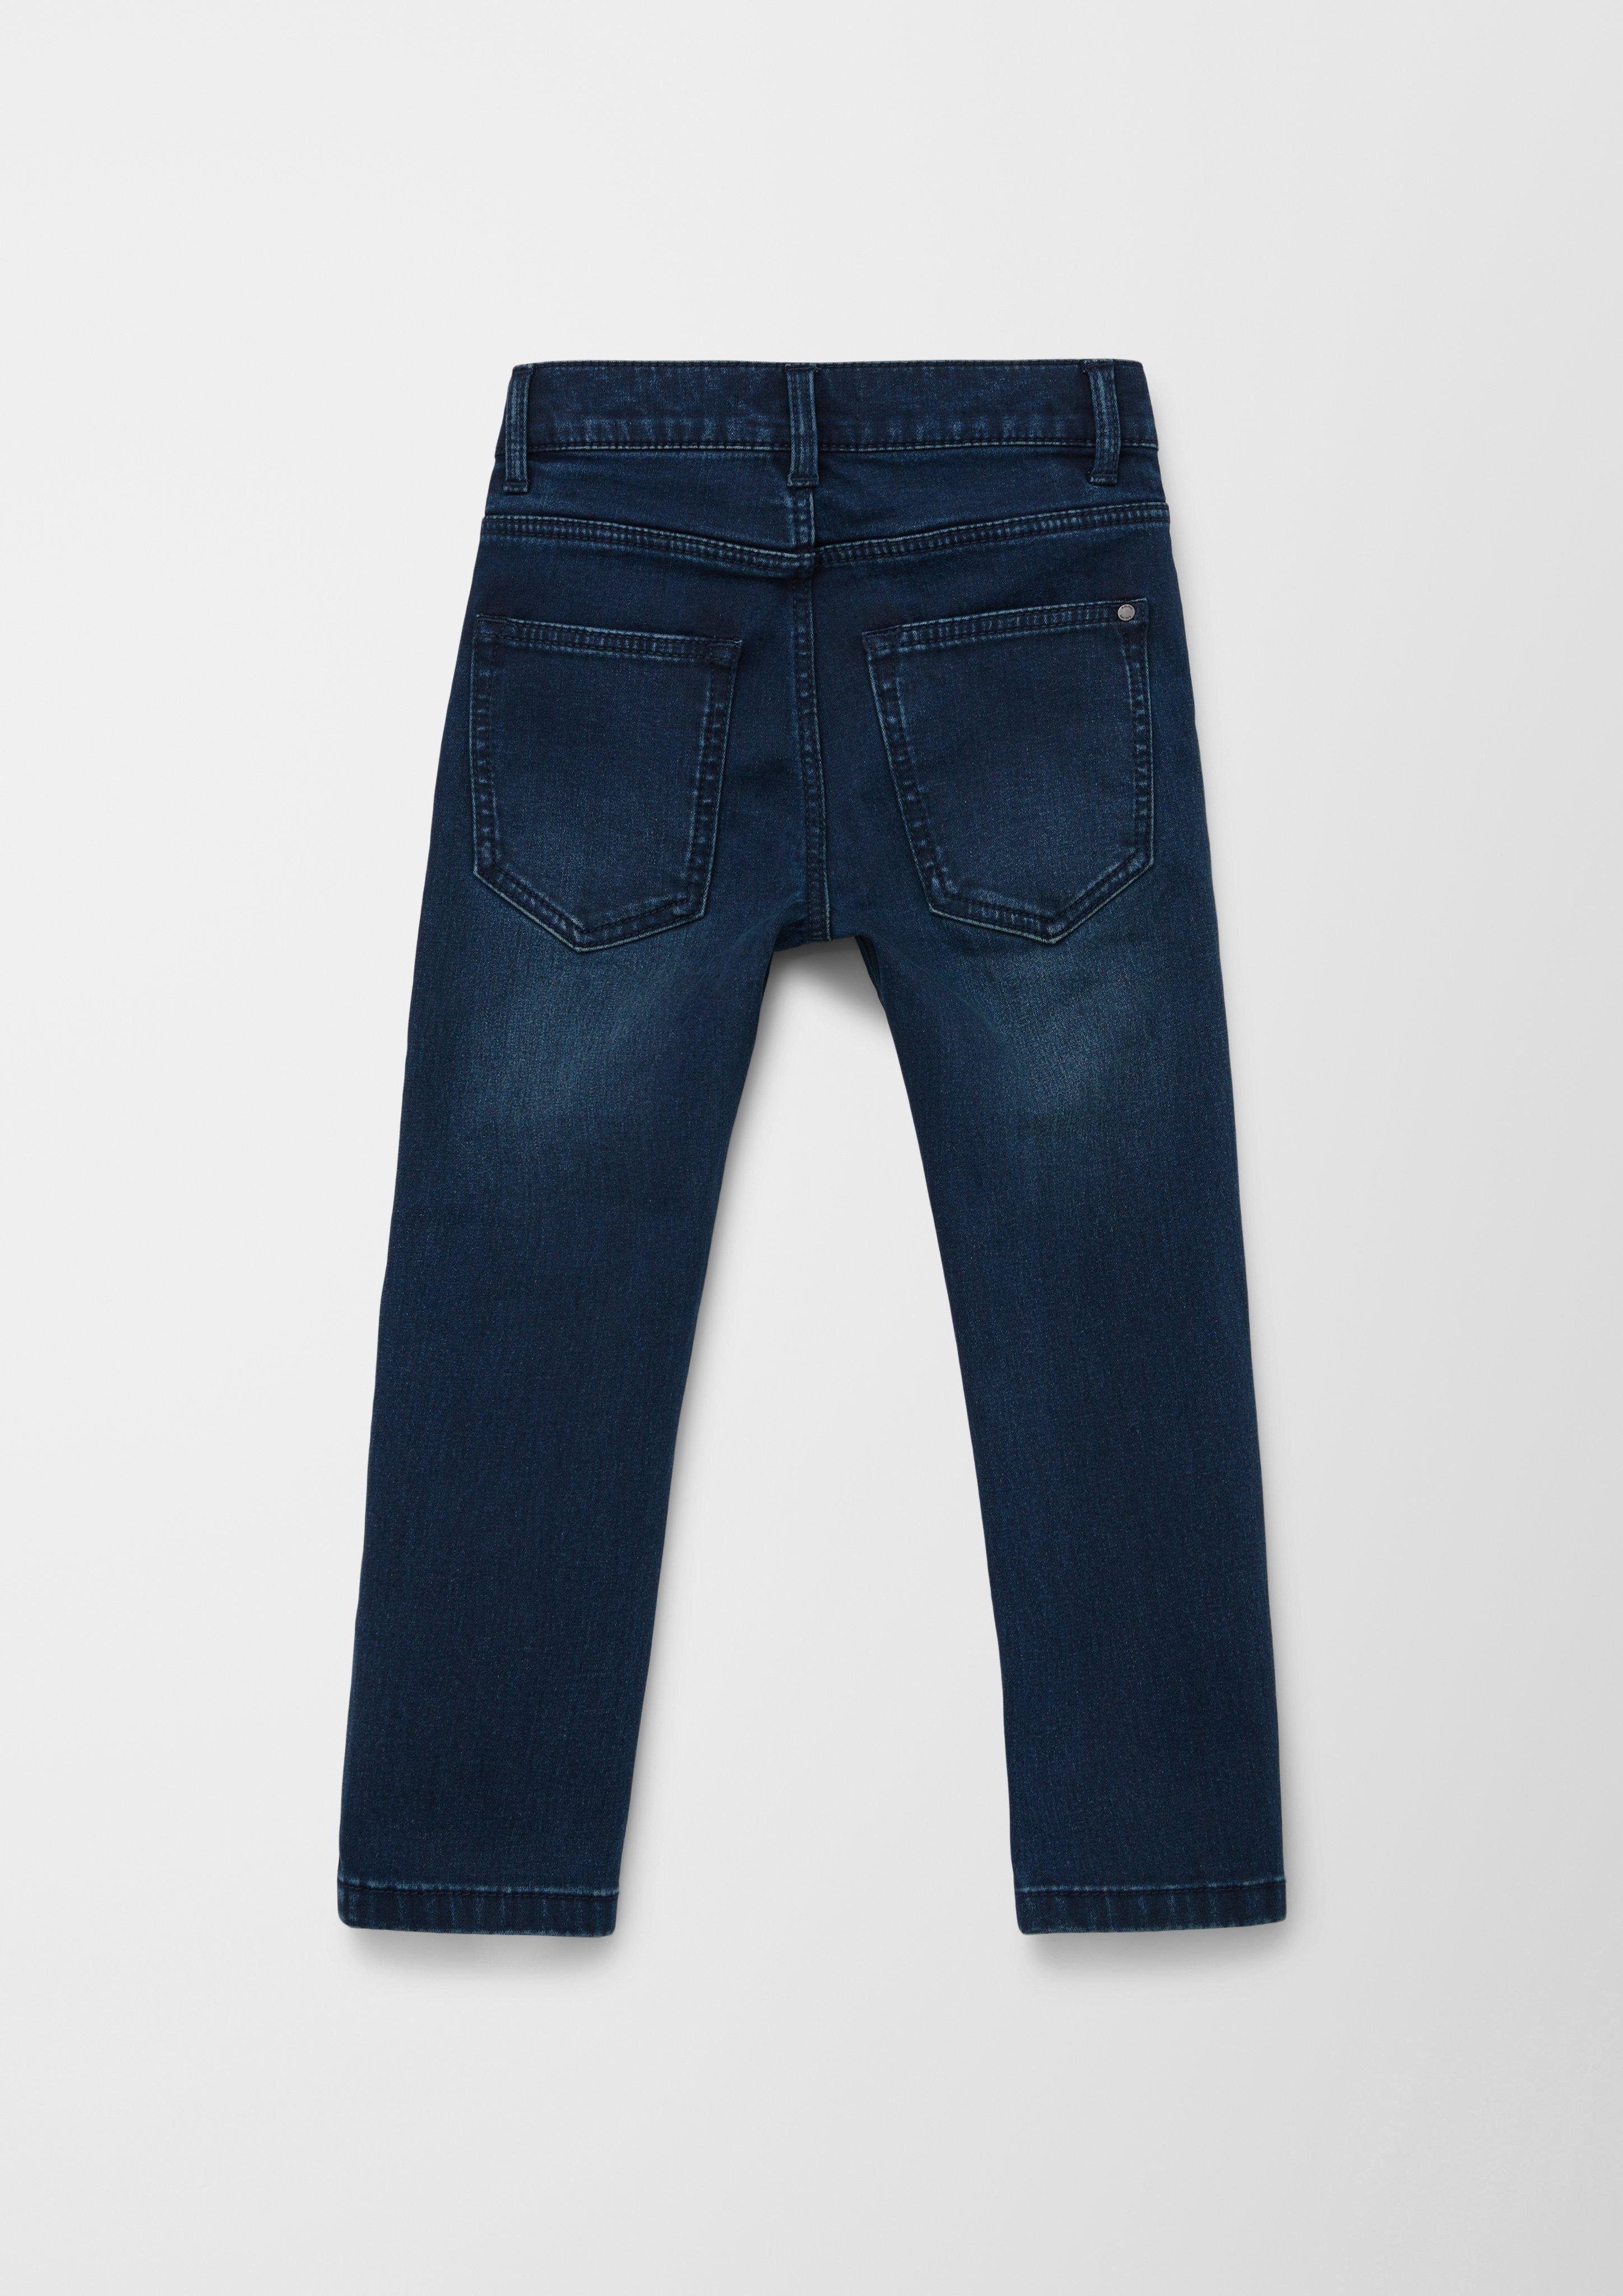 Pelle Straight s.Oliver Used-Look / Jeans / Leg Fit Mid / 5-Pocket-Jeans / Regular Waschung Rise Kontrastnähte,